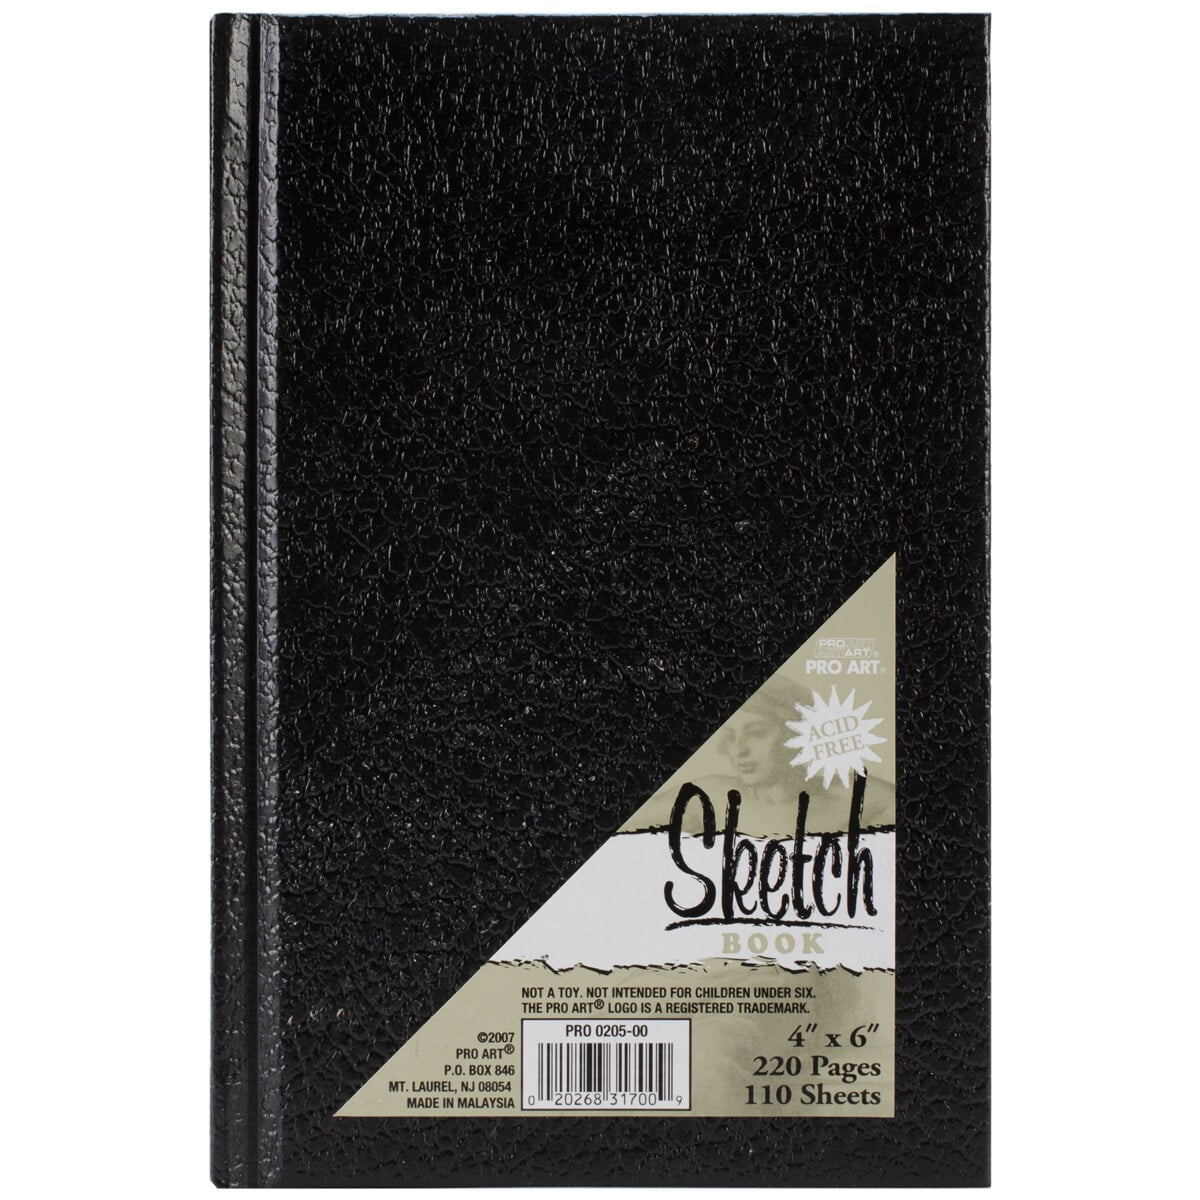 Pro Art Premier Sketch Book Travel 8x 6 Black 74lb Red 80 Sheets